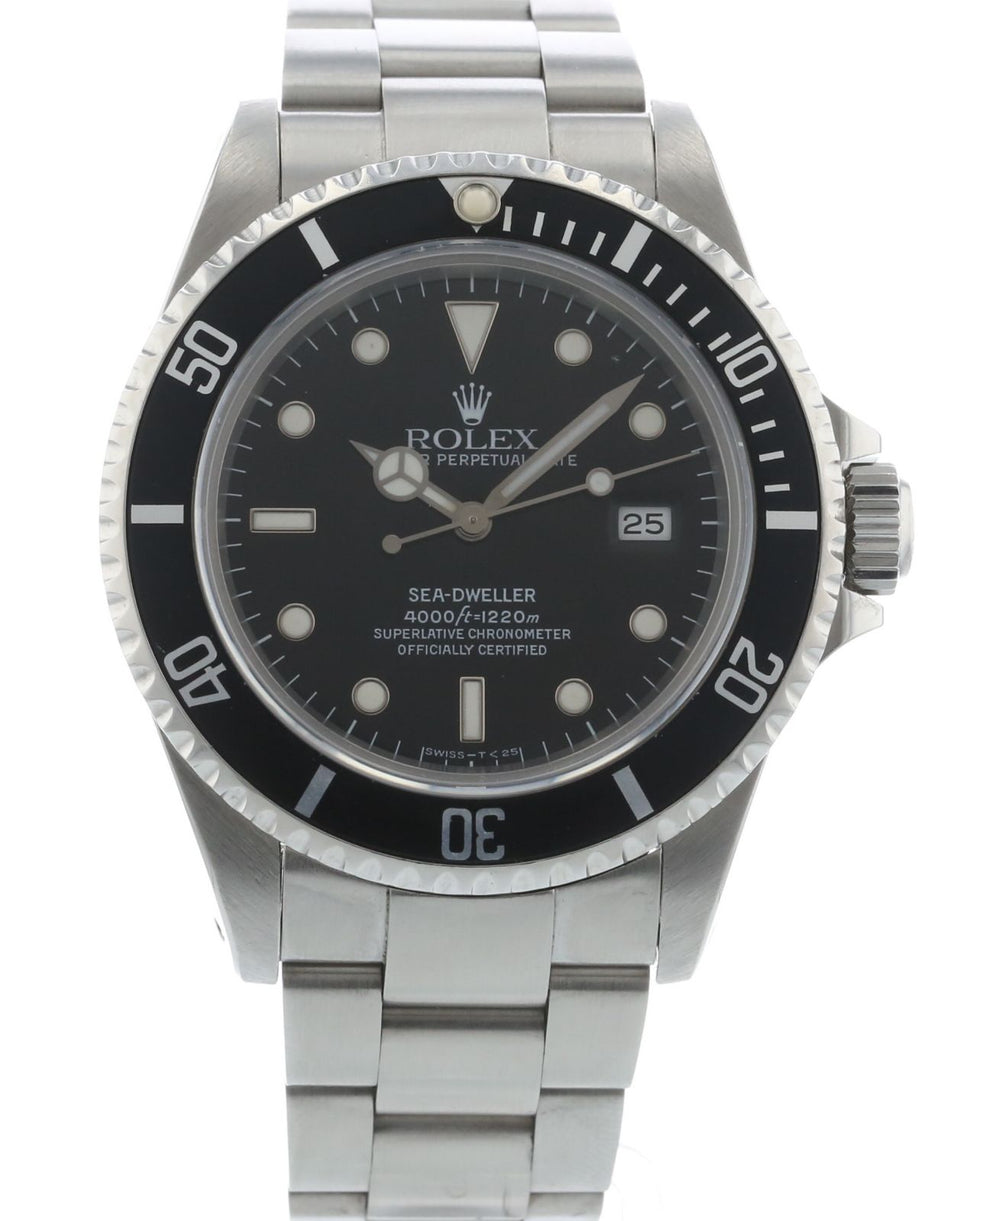 Rolex Sea-Dweller 16600 1